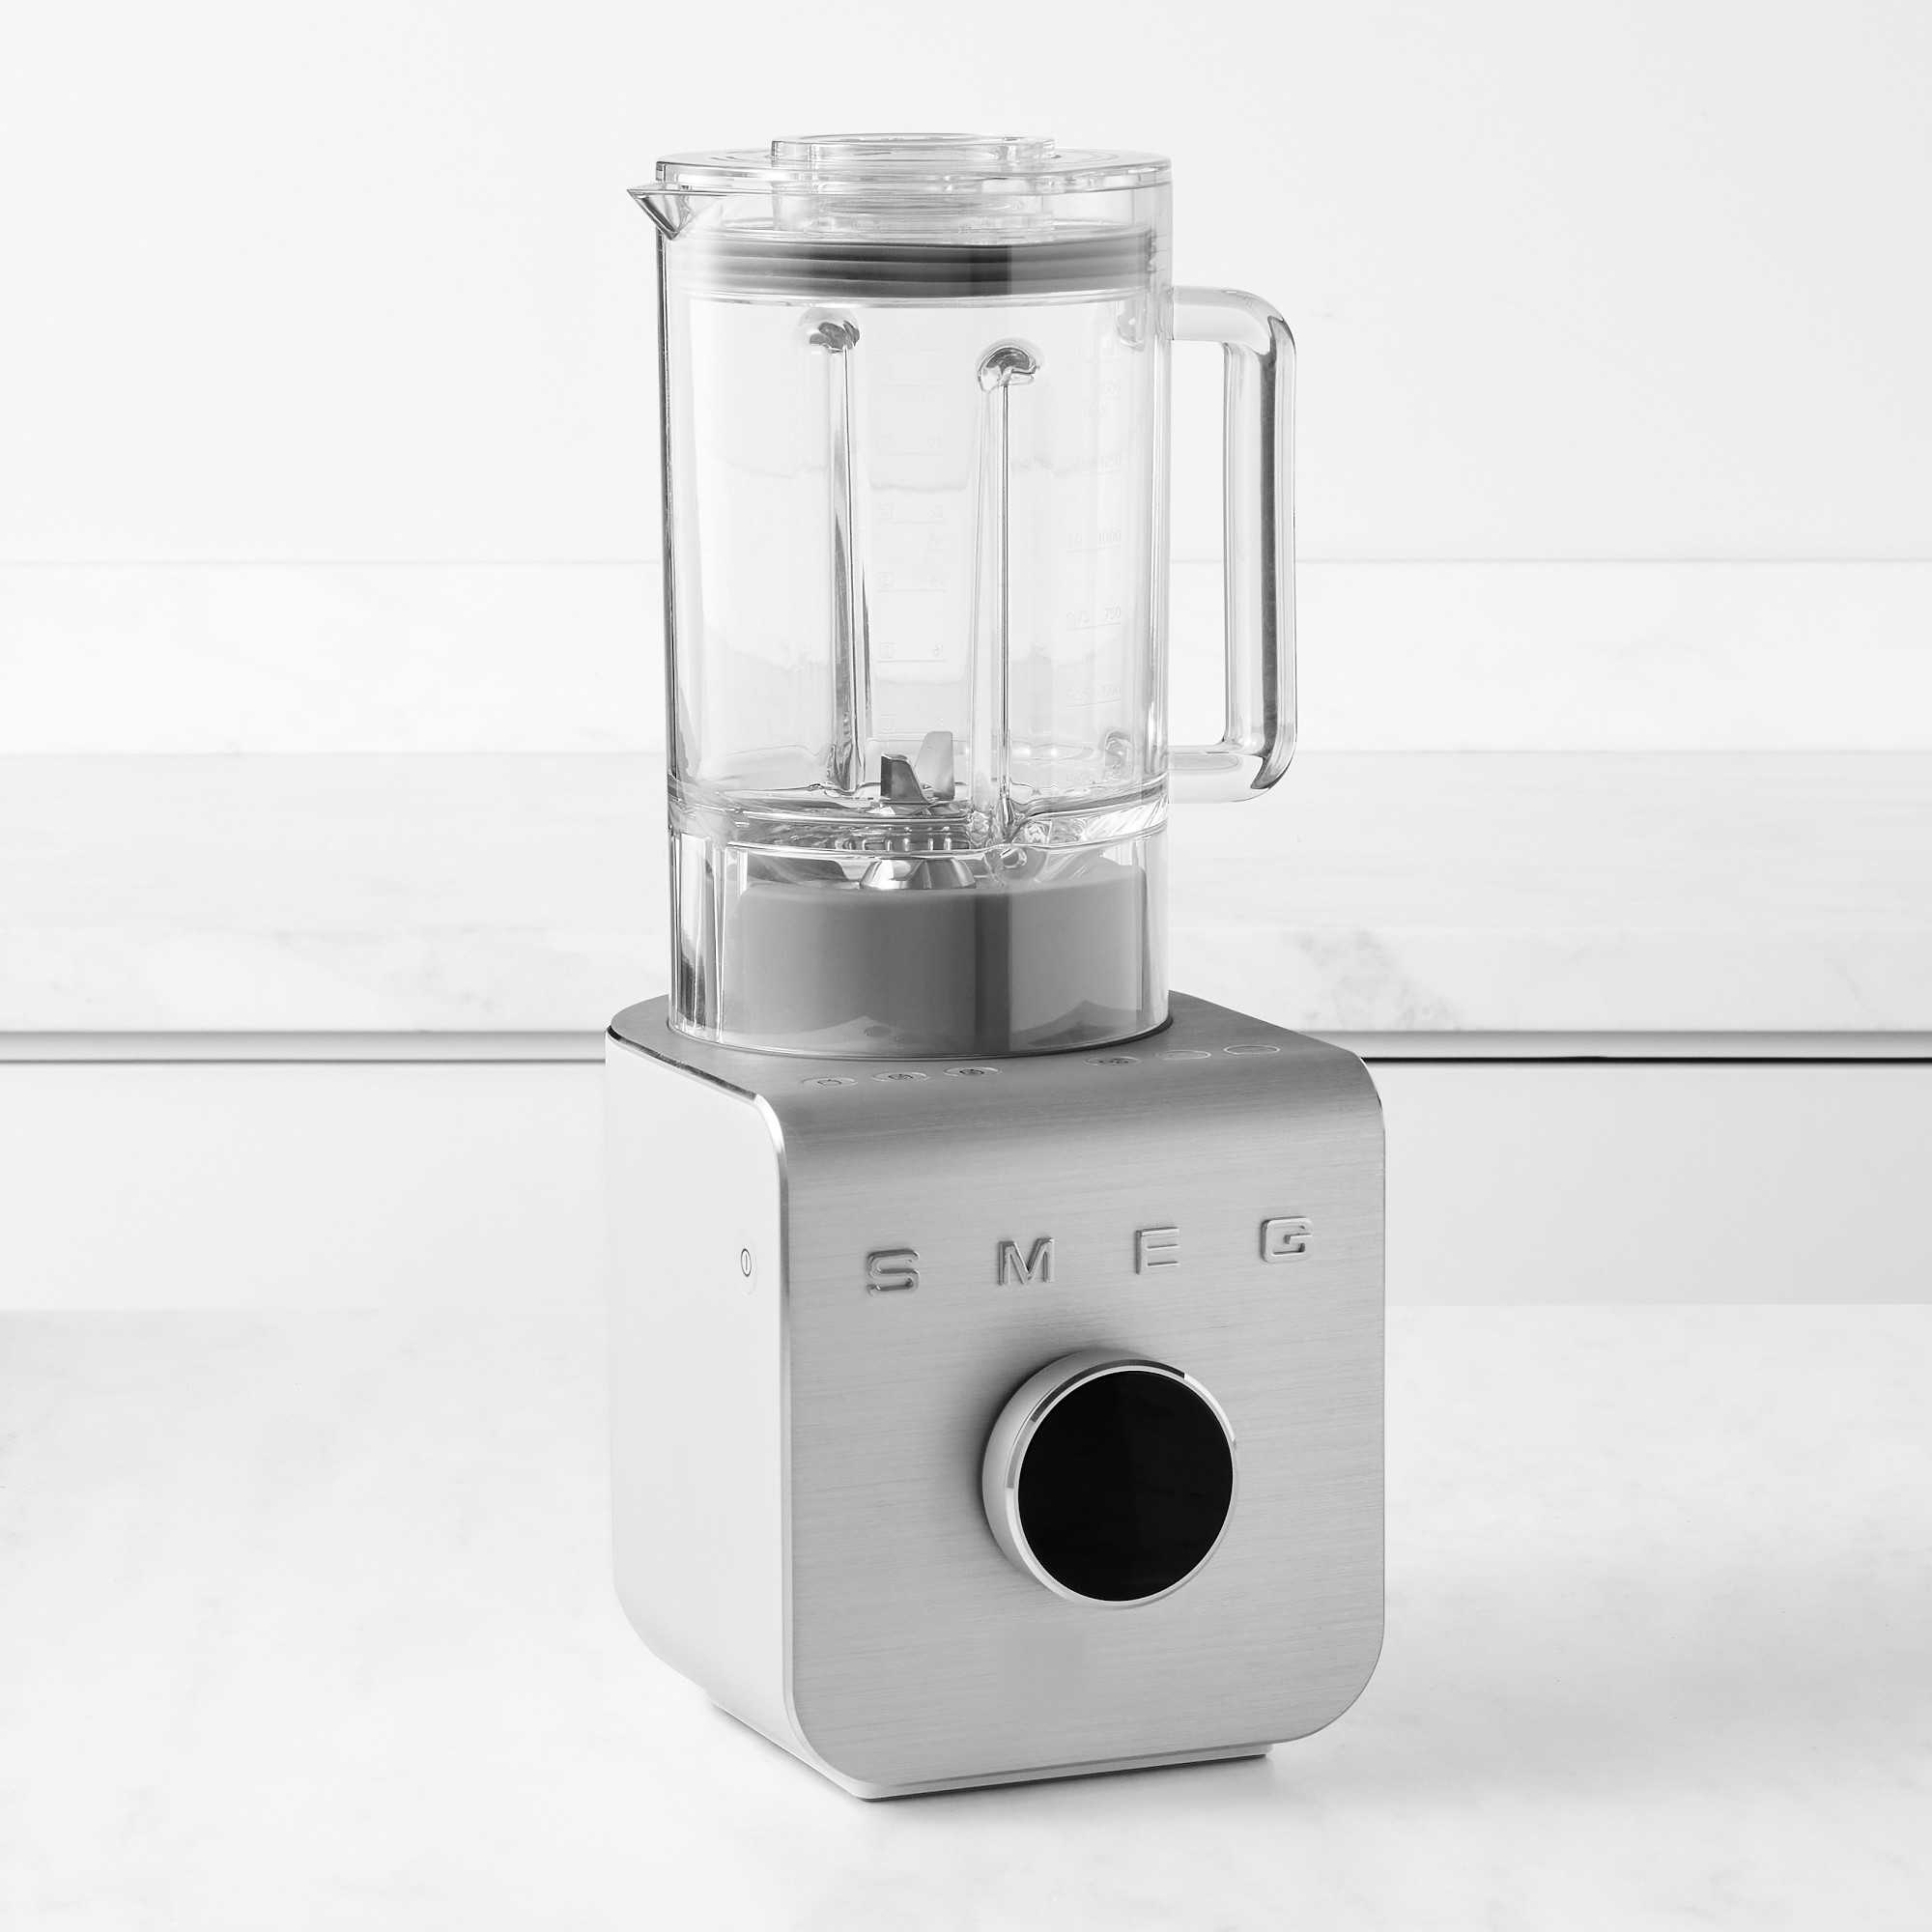 SMEG Launches Professional Blender